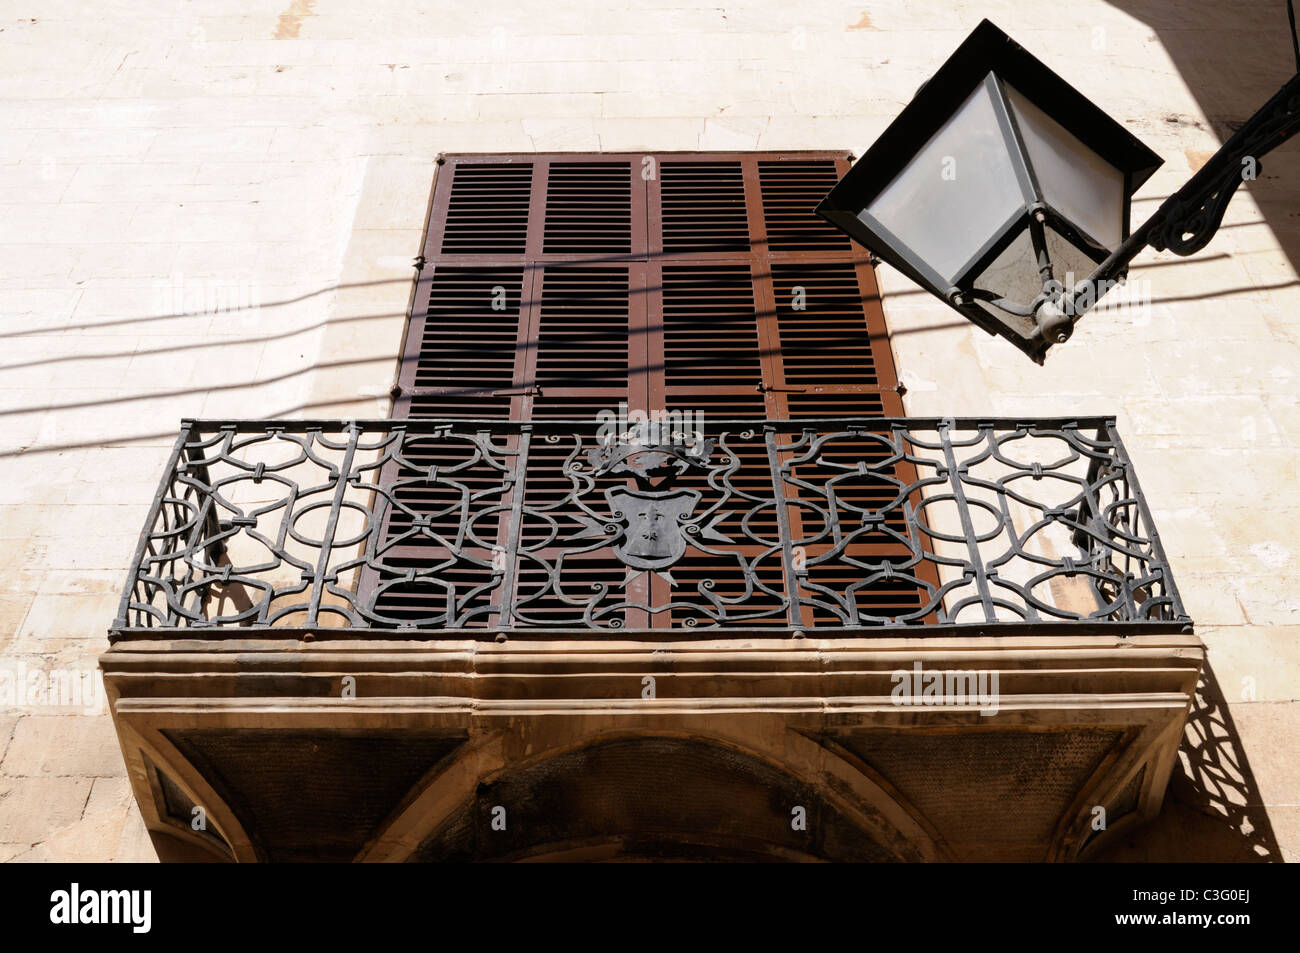 Schmiedeeiserner Balkon, Altstadt von Palma, Mallorca, Spanien. - Wrought-iron balcony, old town of Palma, Majorca, Spain. Stock Photo